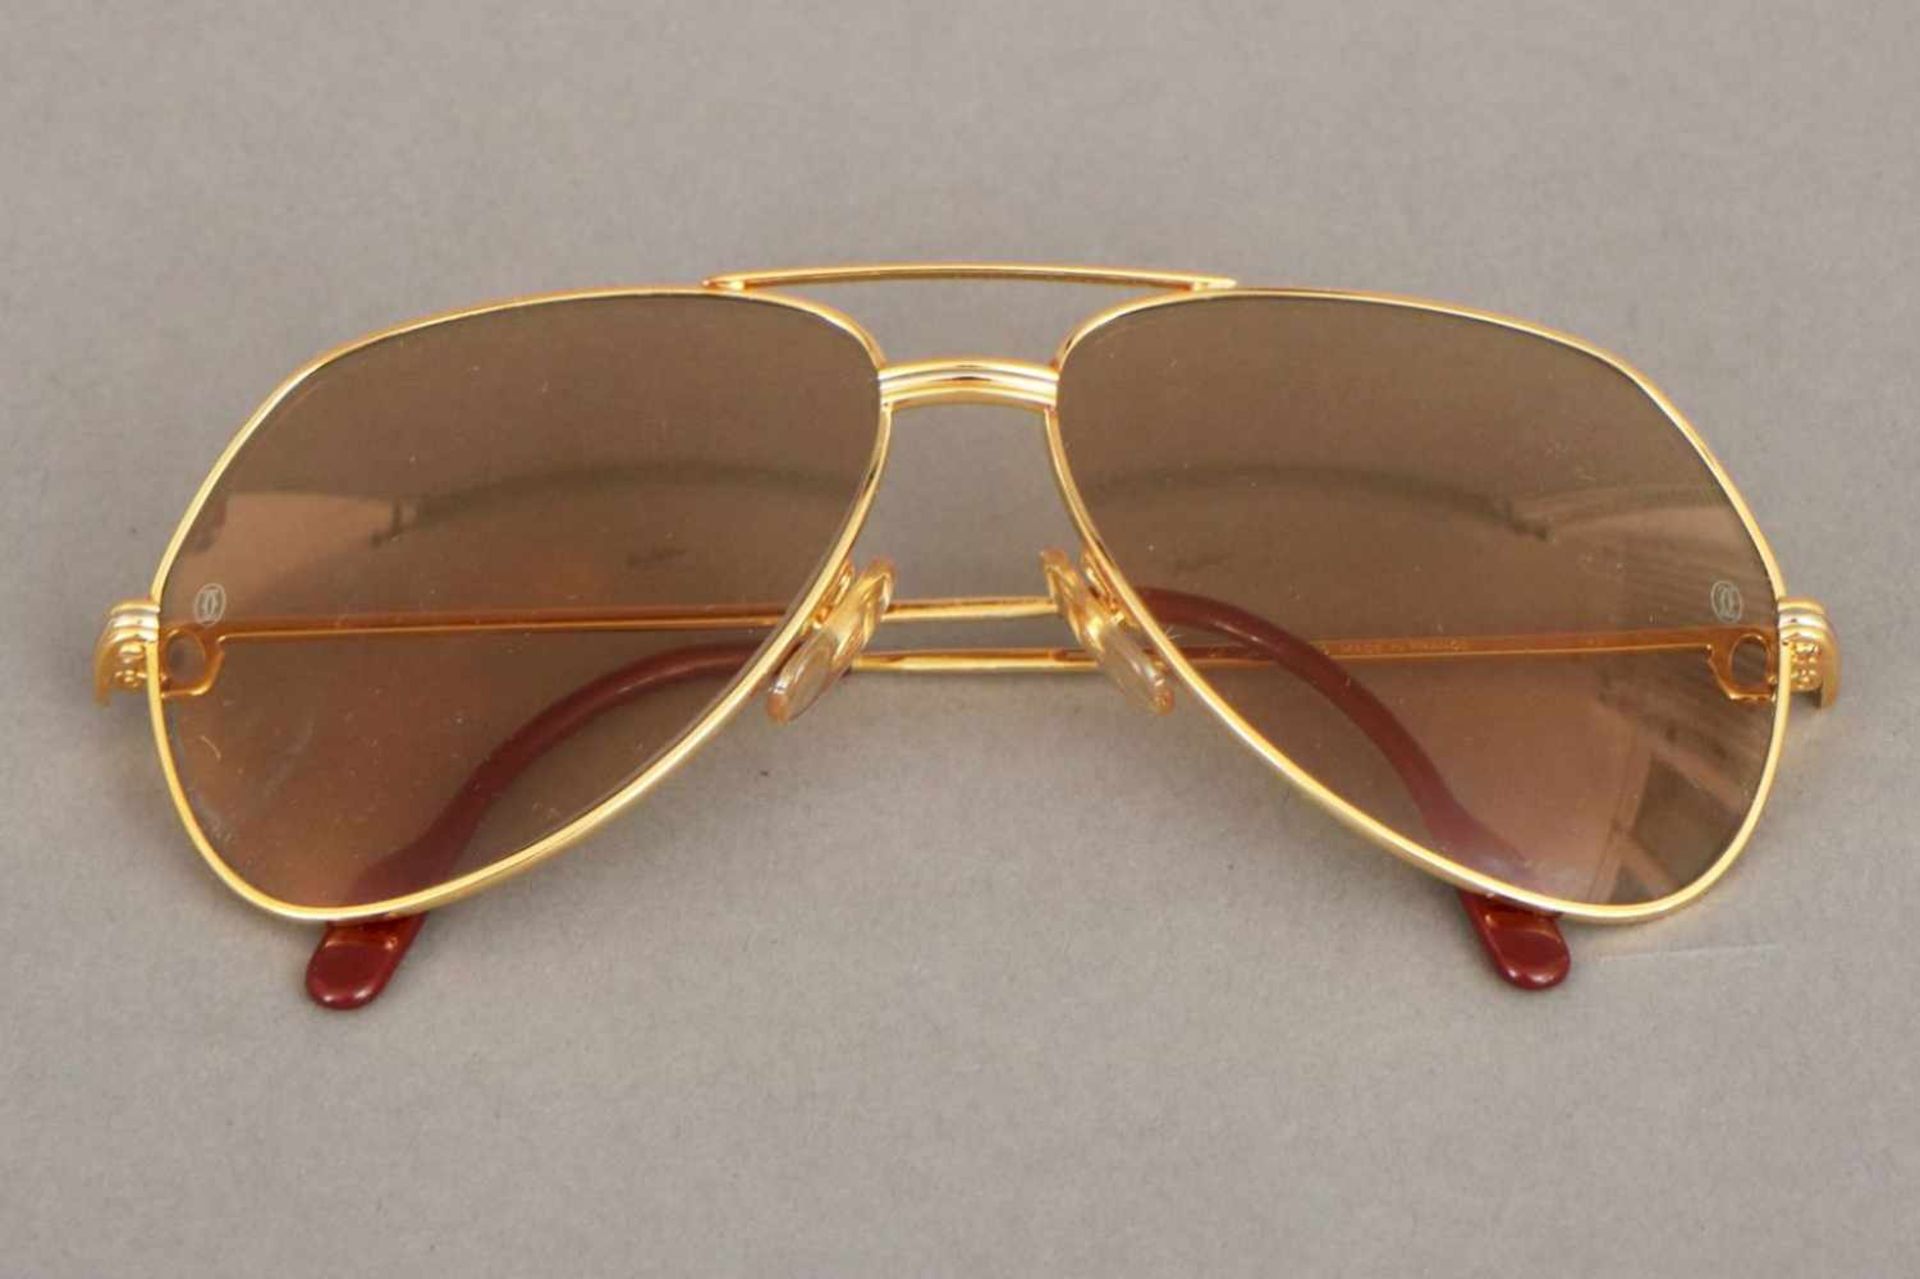 Le must de CARTIER Sonnenbrille ¨trinity¨vergoldetes Metall, bräunlich getöntes Glas, nummeriert - Bild 3 aus 3